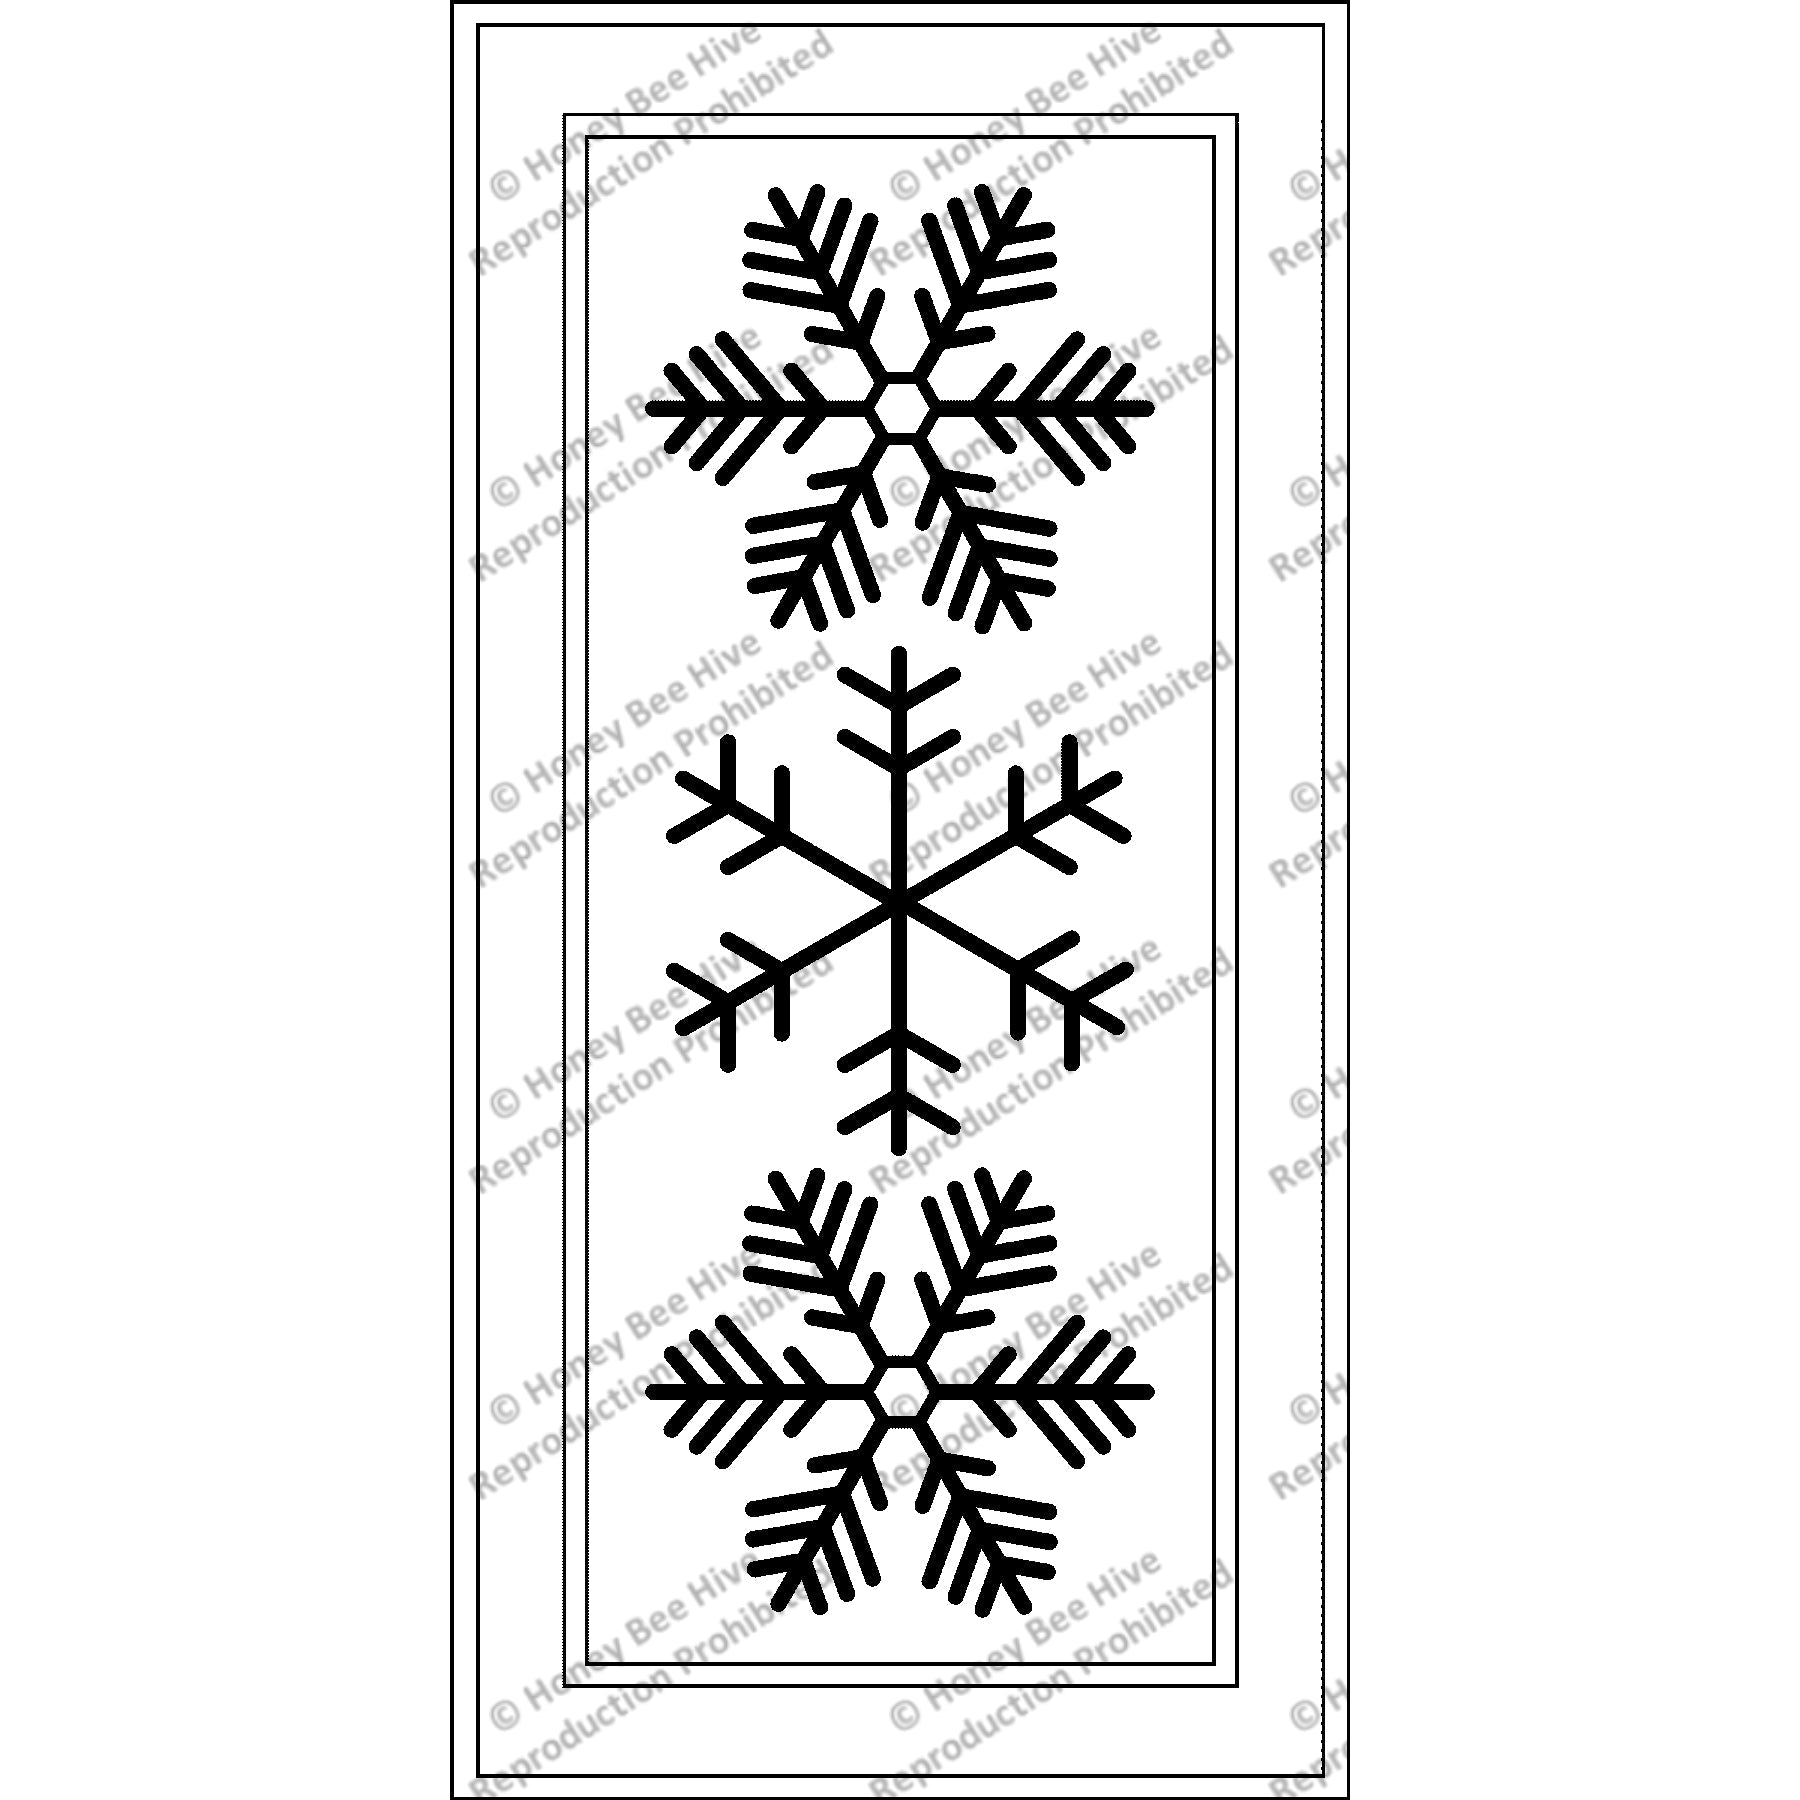 Three Snow Flakes, rug hooking pattern